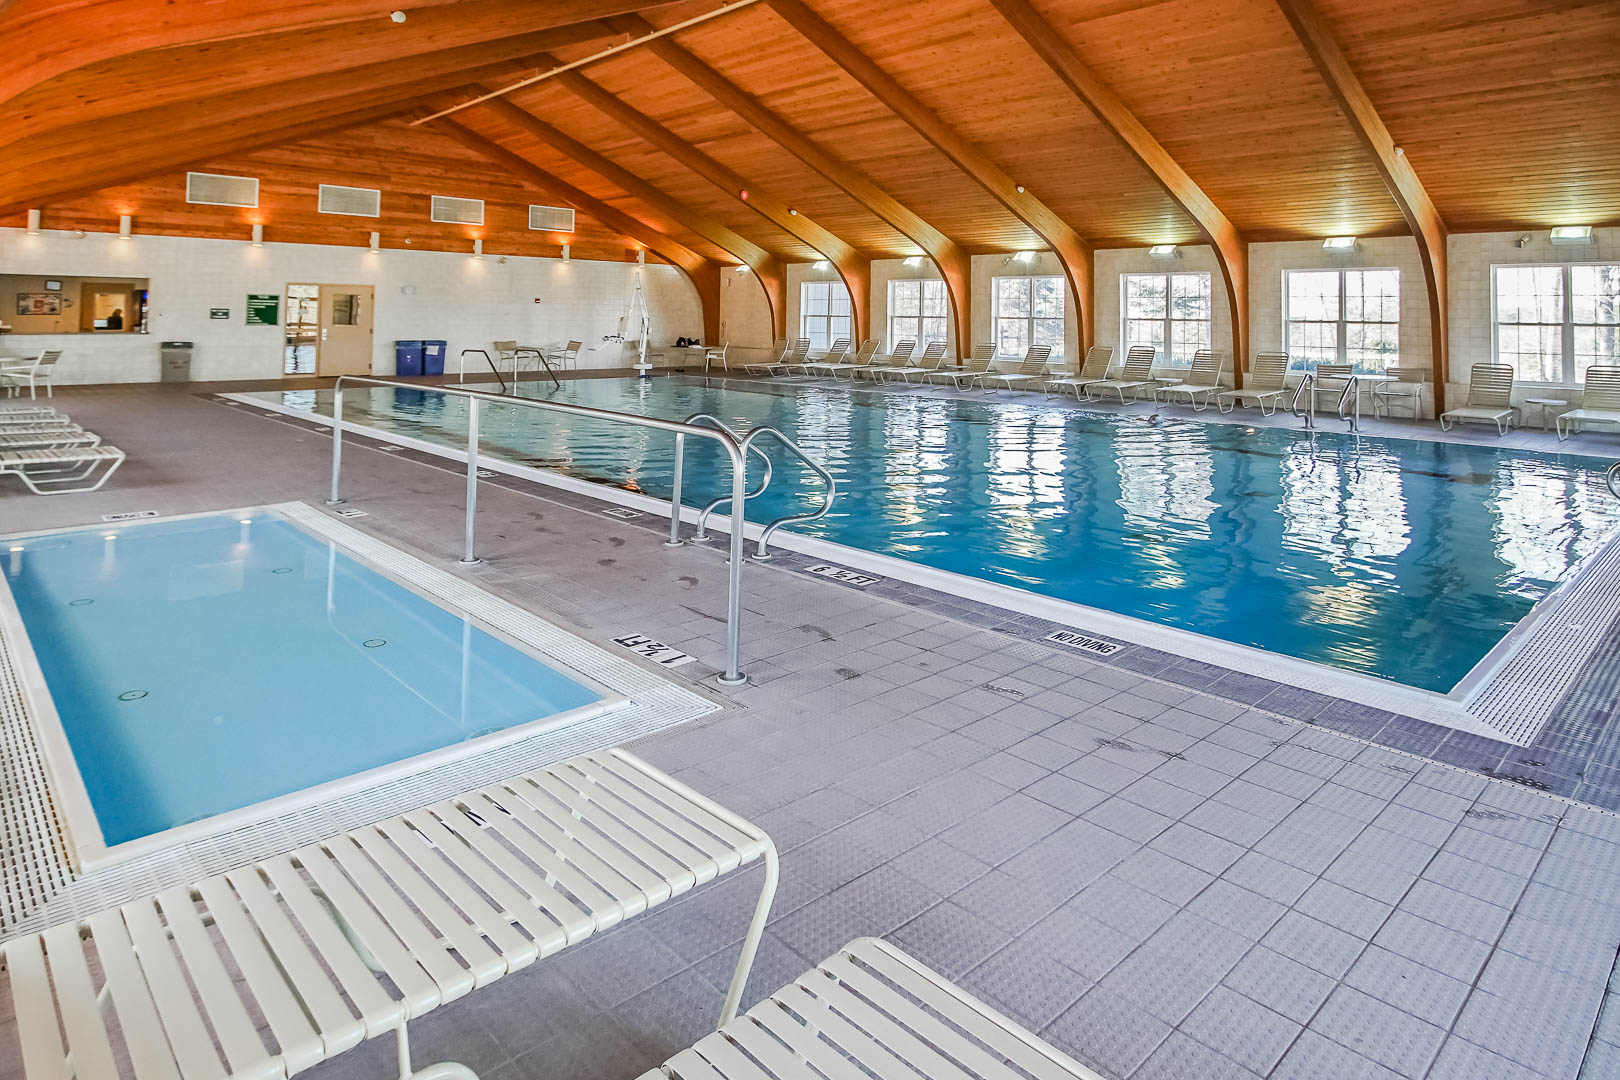 An expansive indoor pool at VRI's Tanglwood Resort in Pennsylvania.